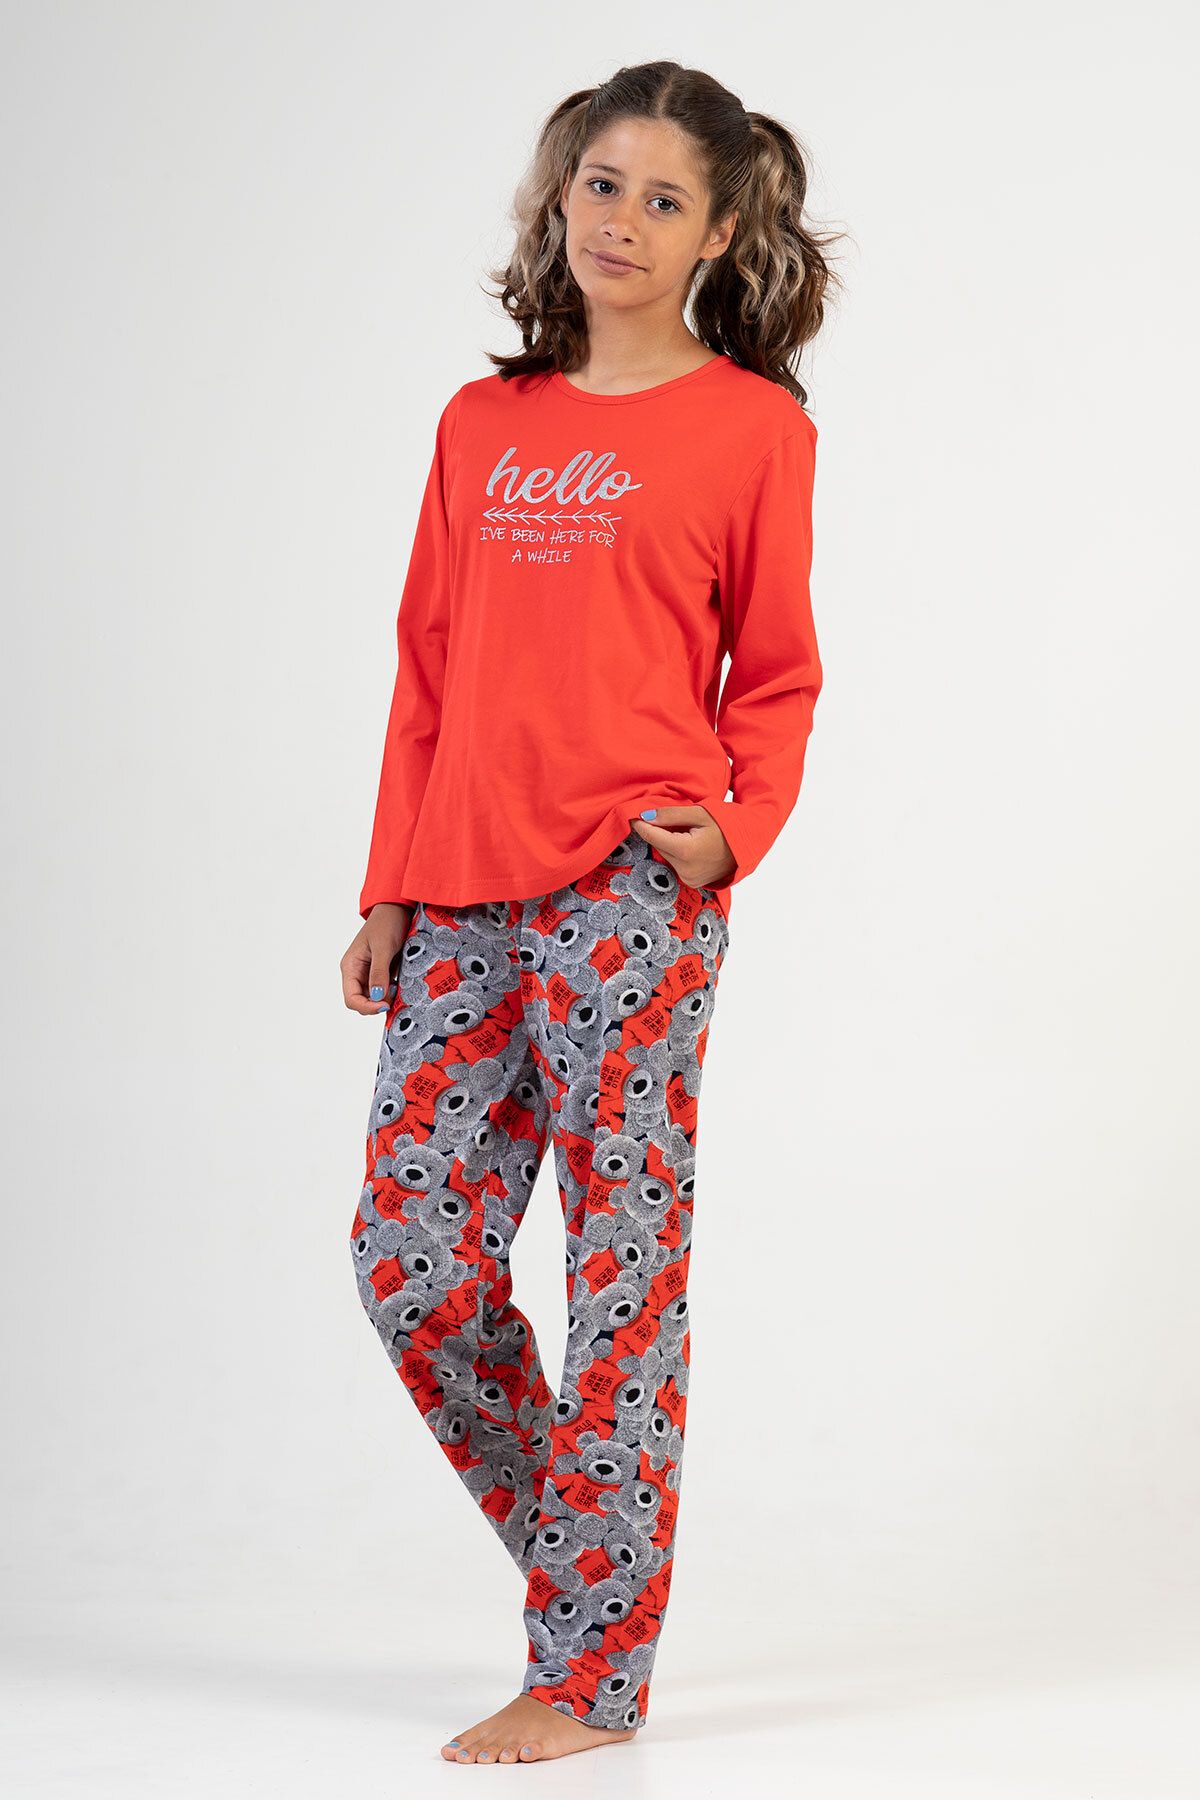 Vienetta Pamuklu Kız Çocuk Uzun Kol Pijama Takım
, 204054